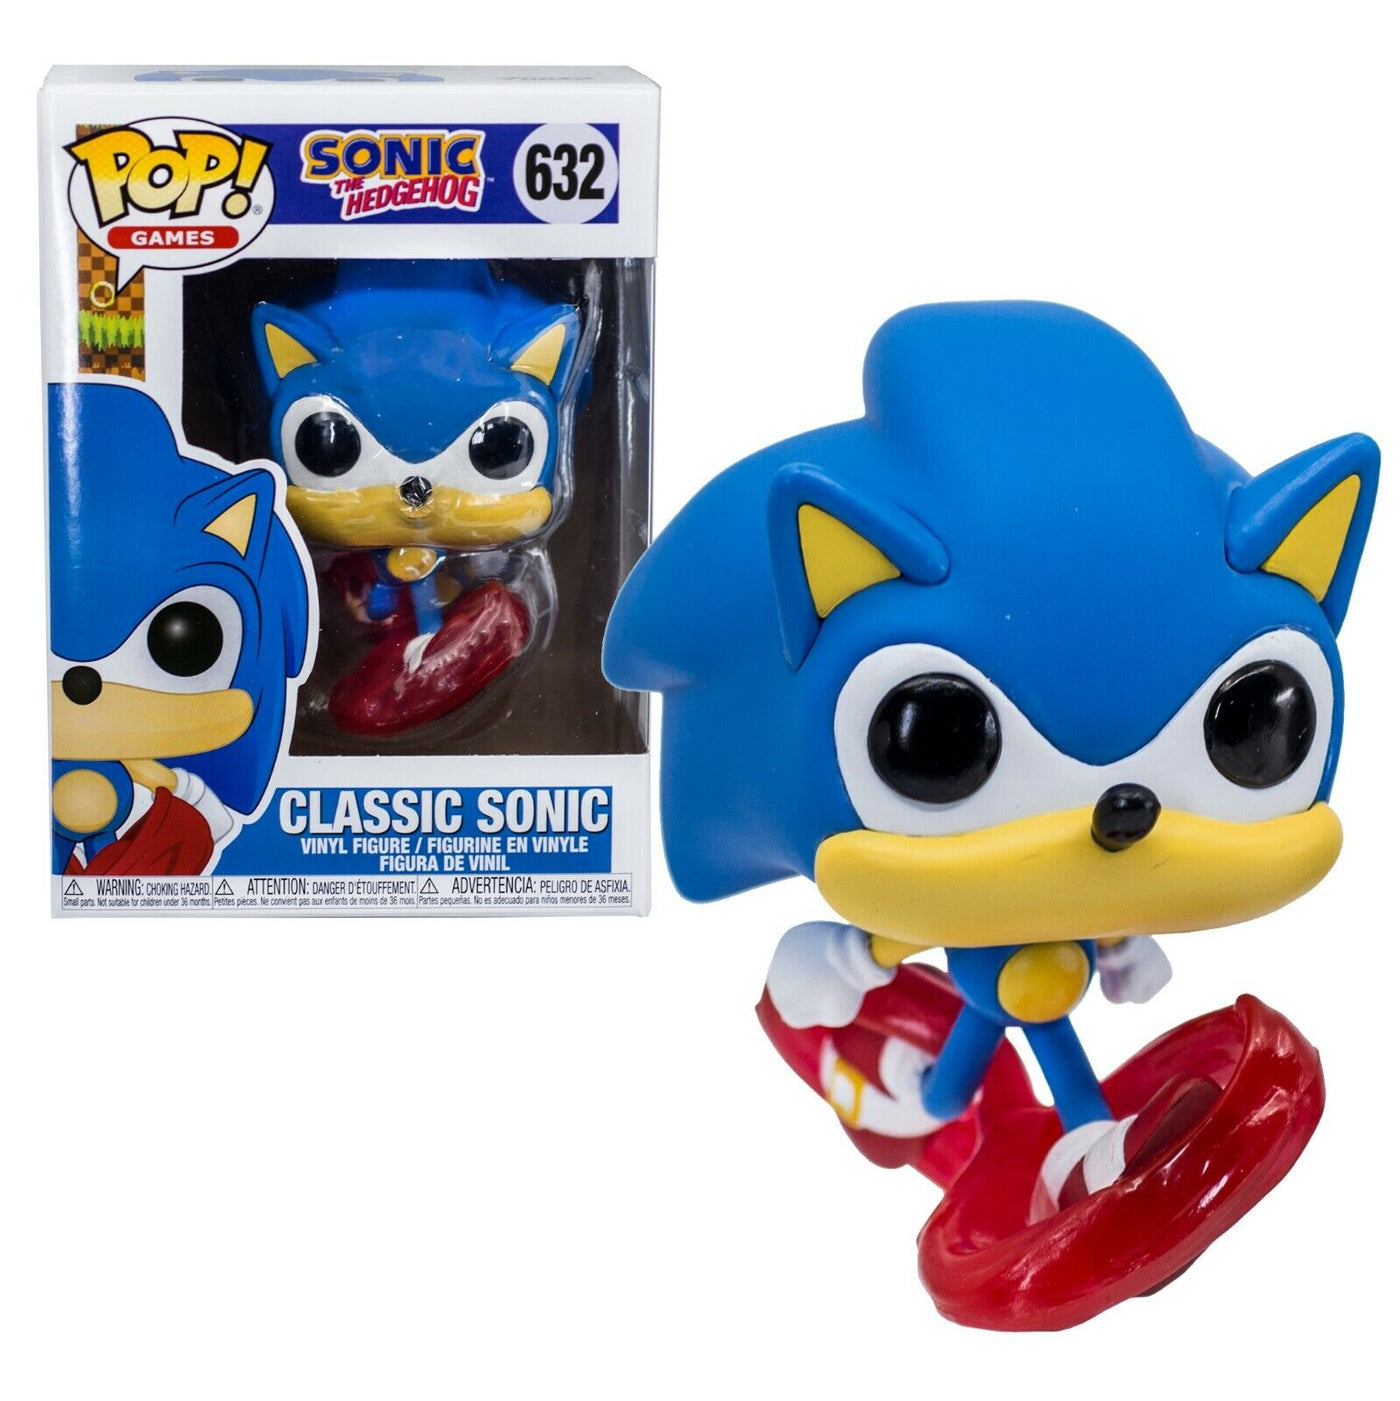 Sonic the Hedgehog - Classic Sonic #632 - Funko Pop! Vinyl Figure